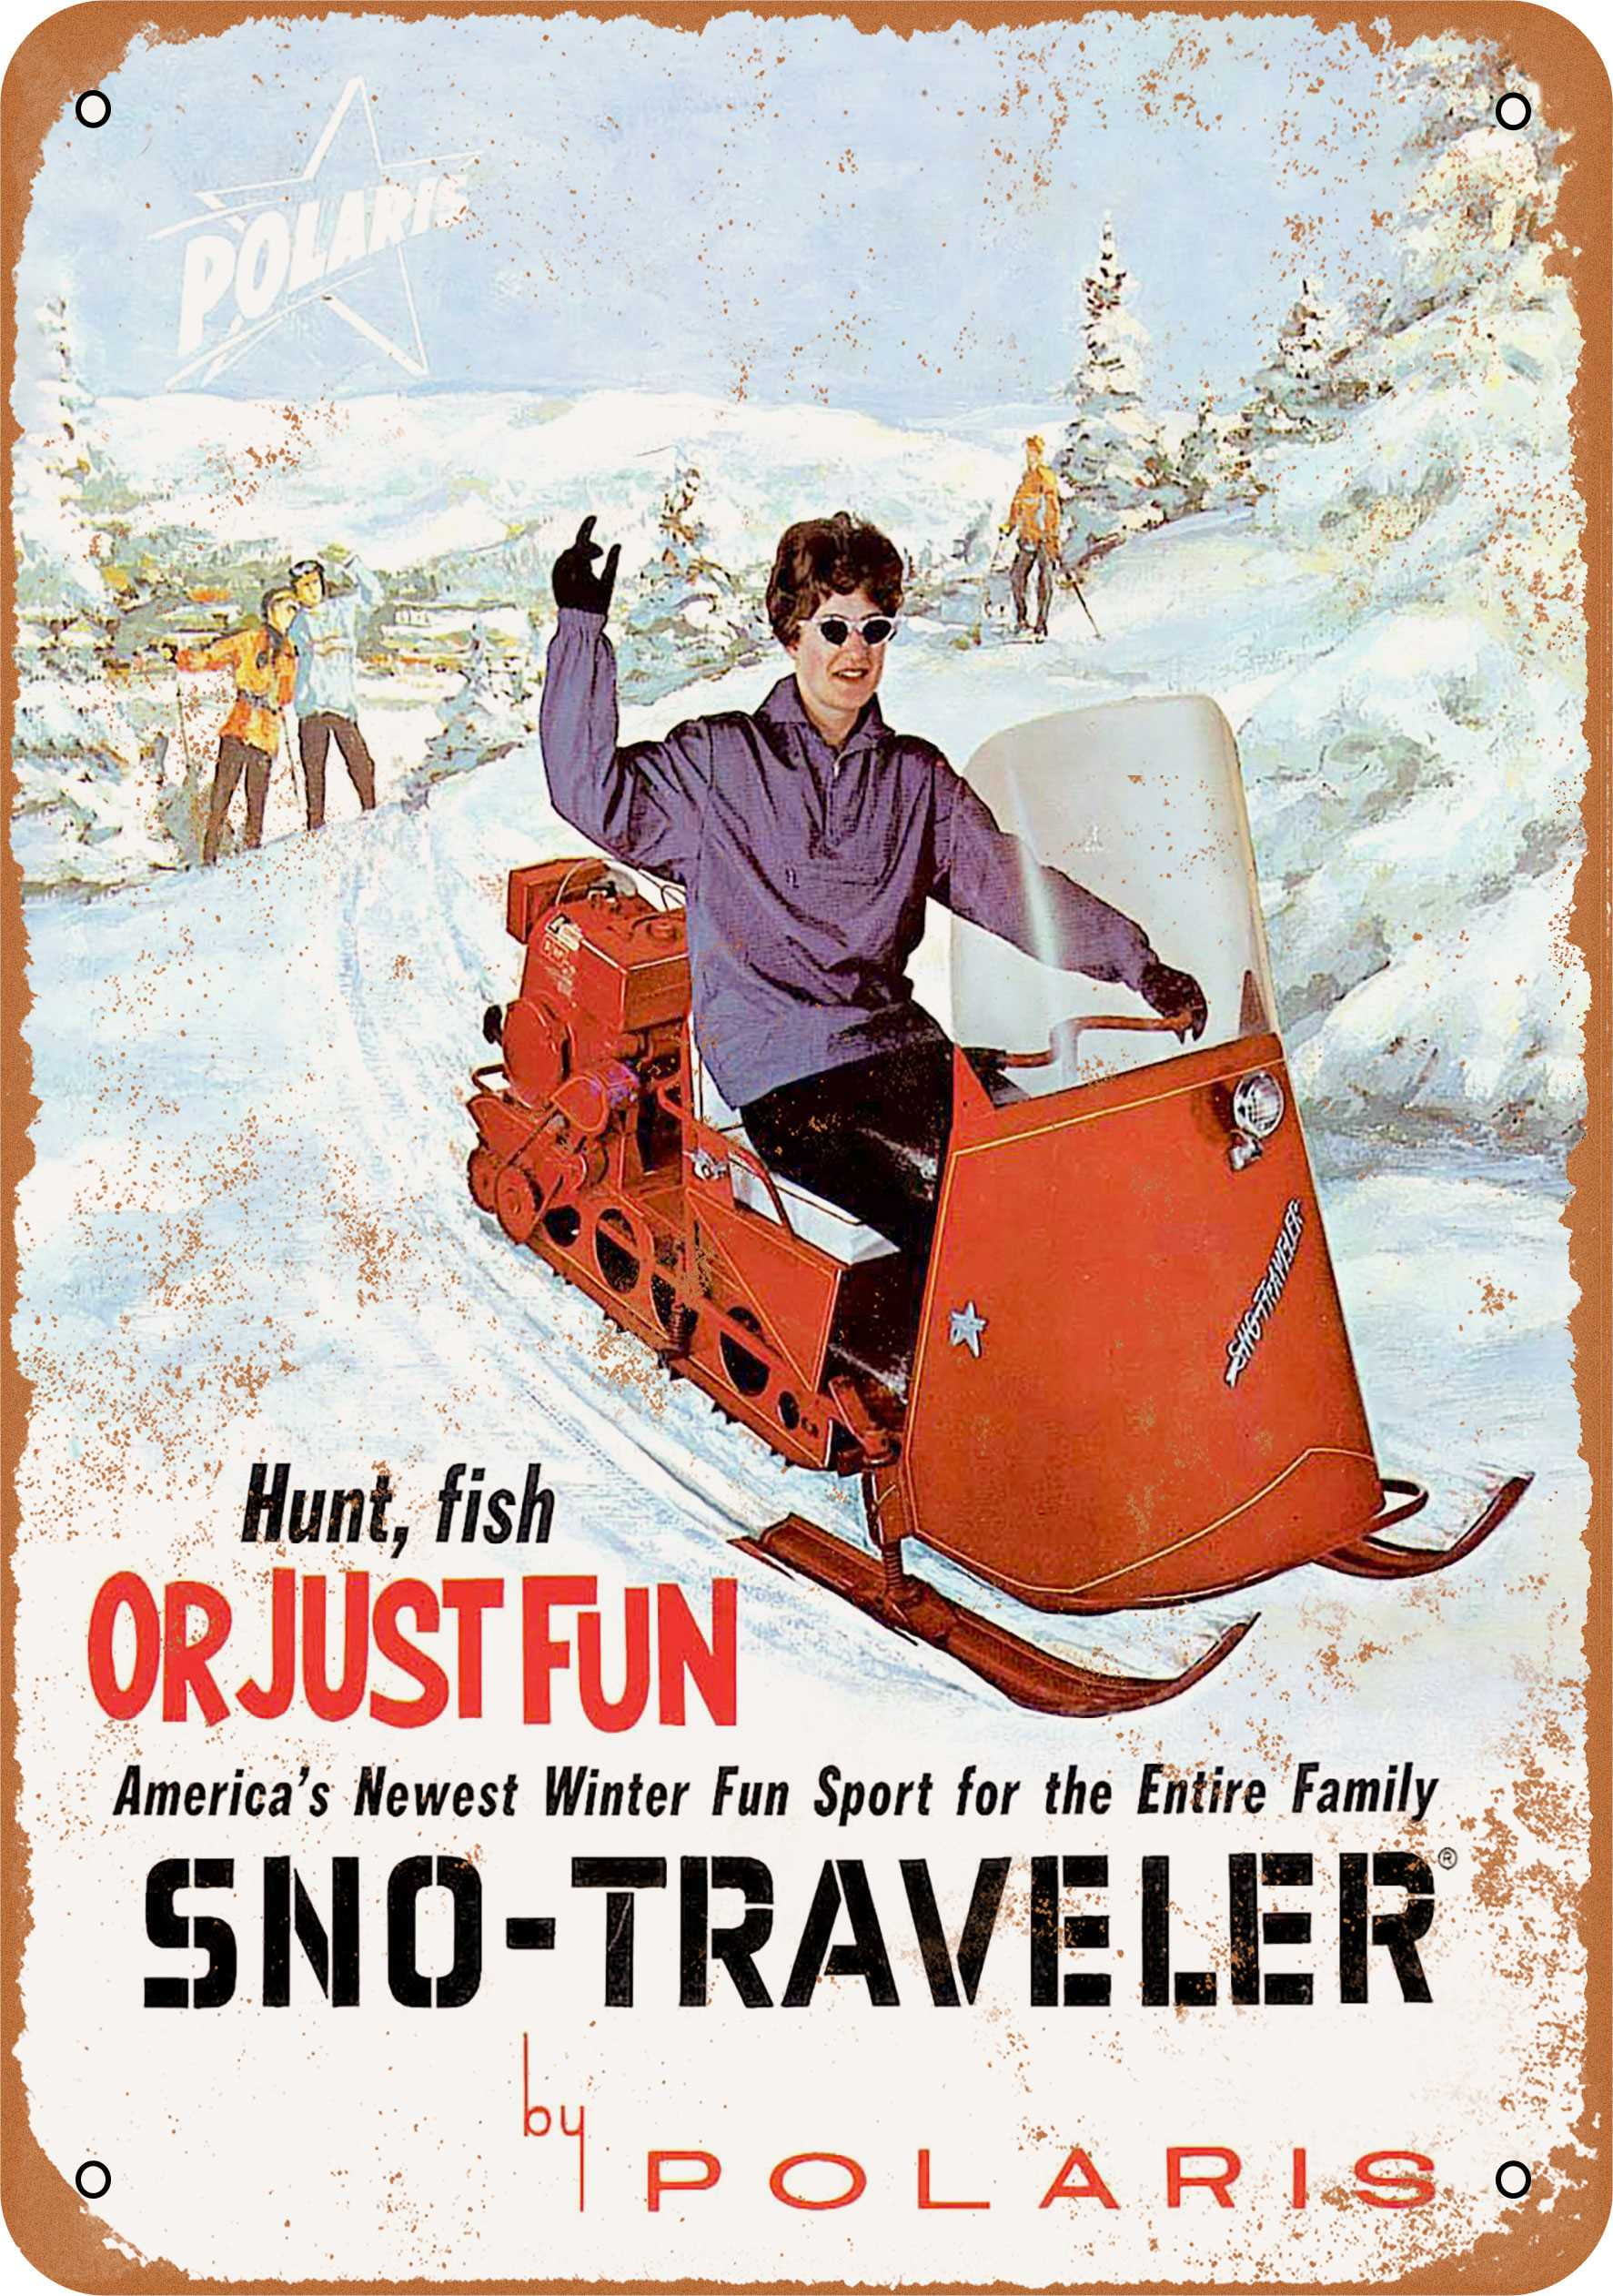 1963 Ski-Doo Snowmobile Vintage Advertising Poster 